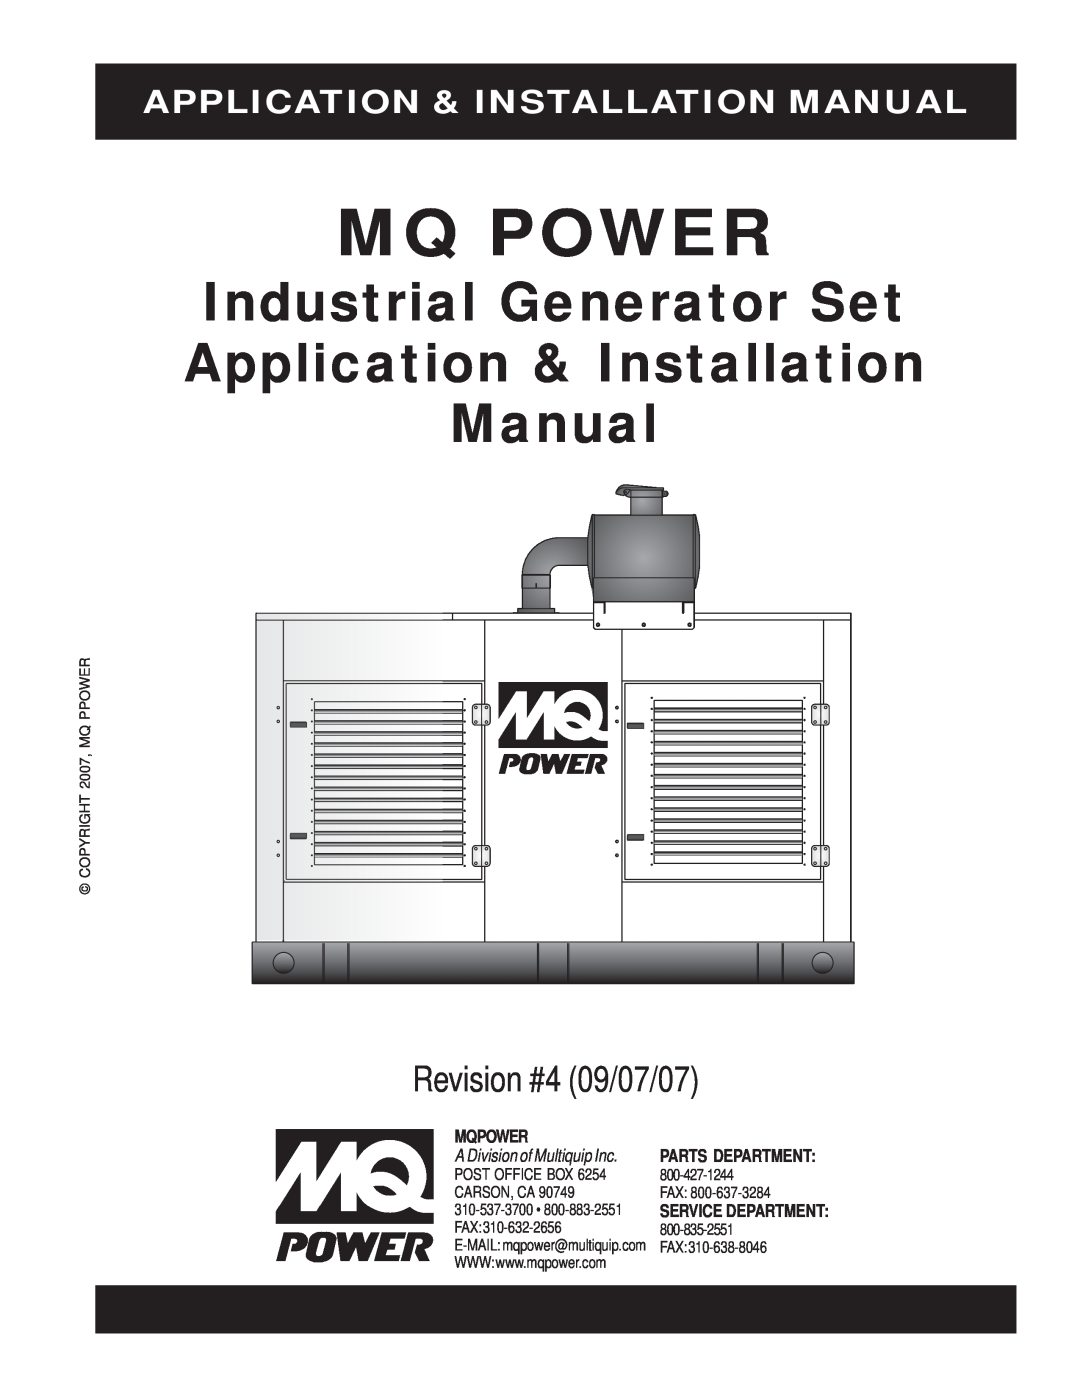 Multiquip MQP40IZ installation manual Application & Installation Manual, Mq Power, Industrial Generator Set, Mqpower, Fax 